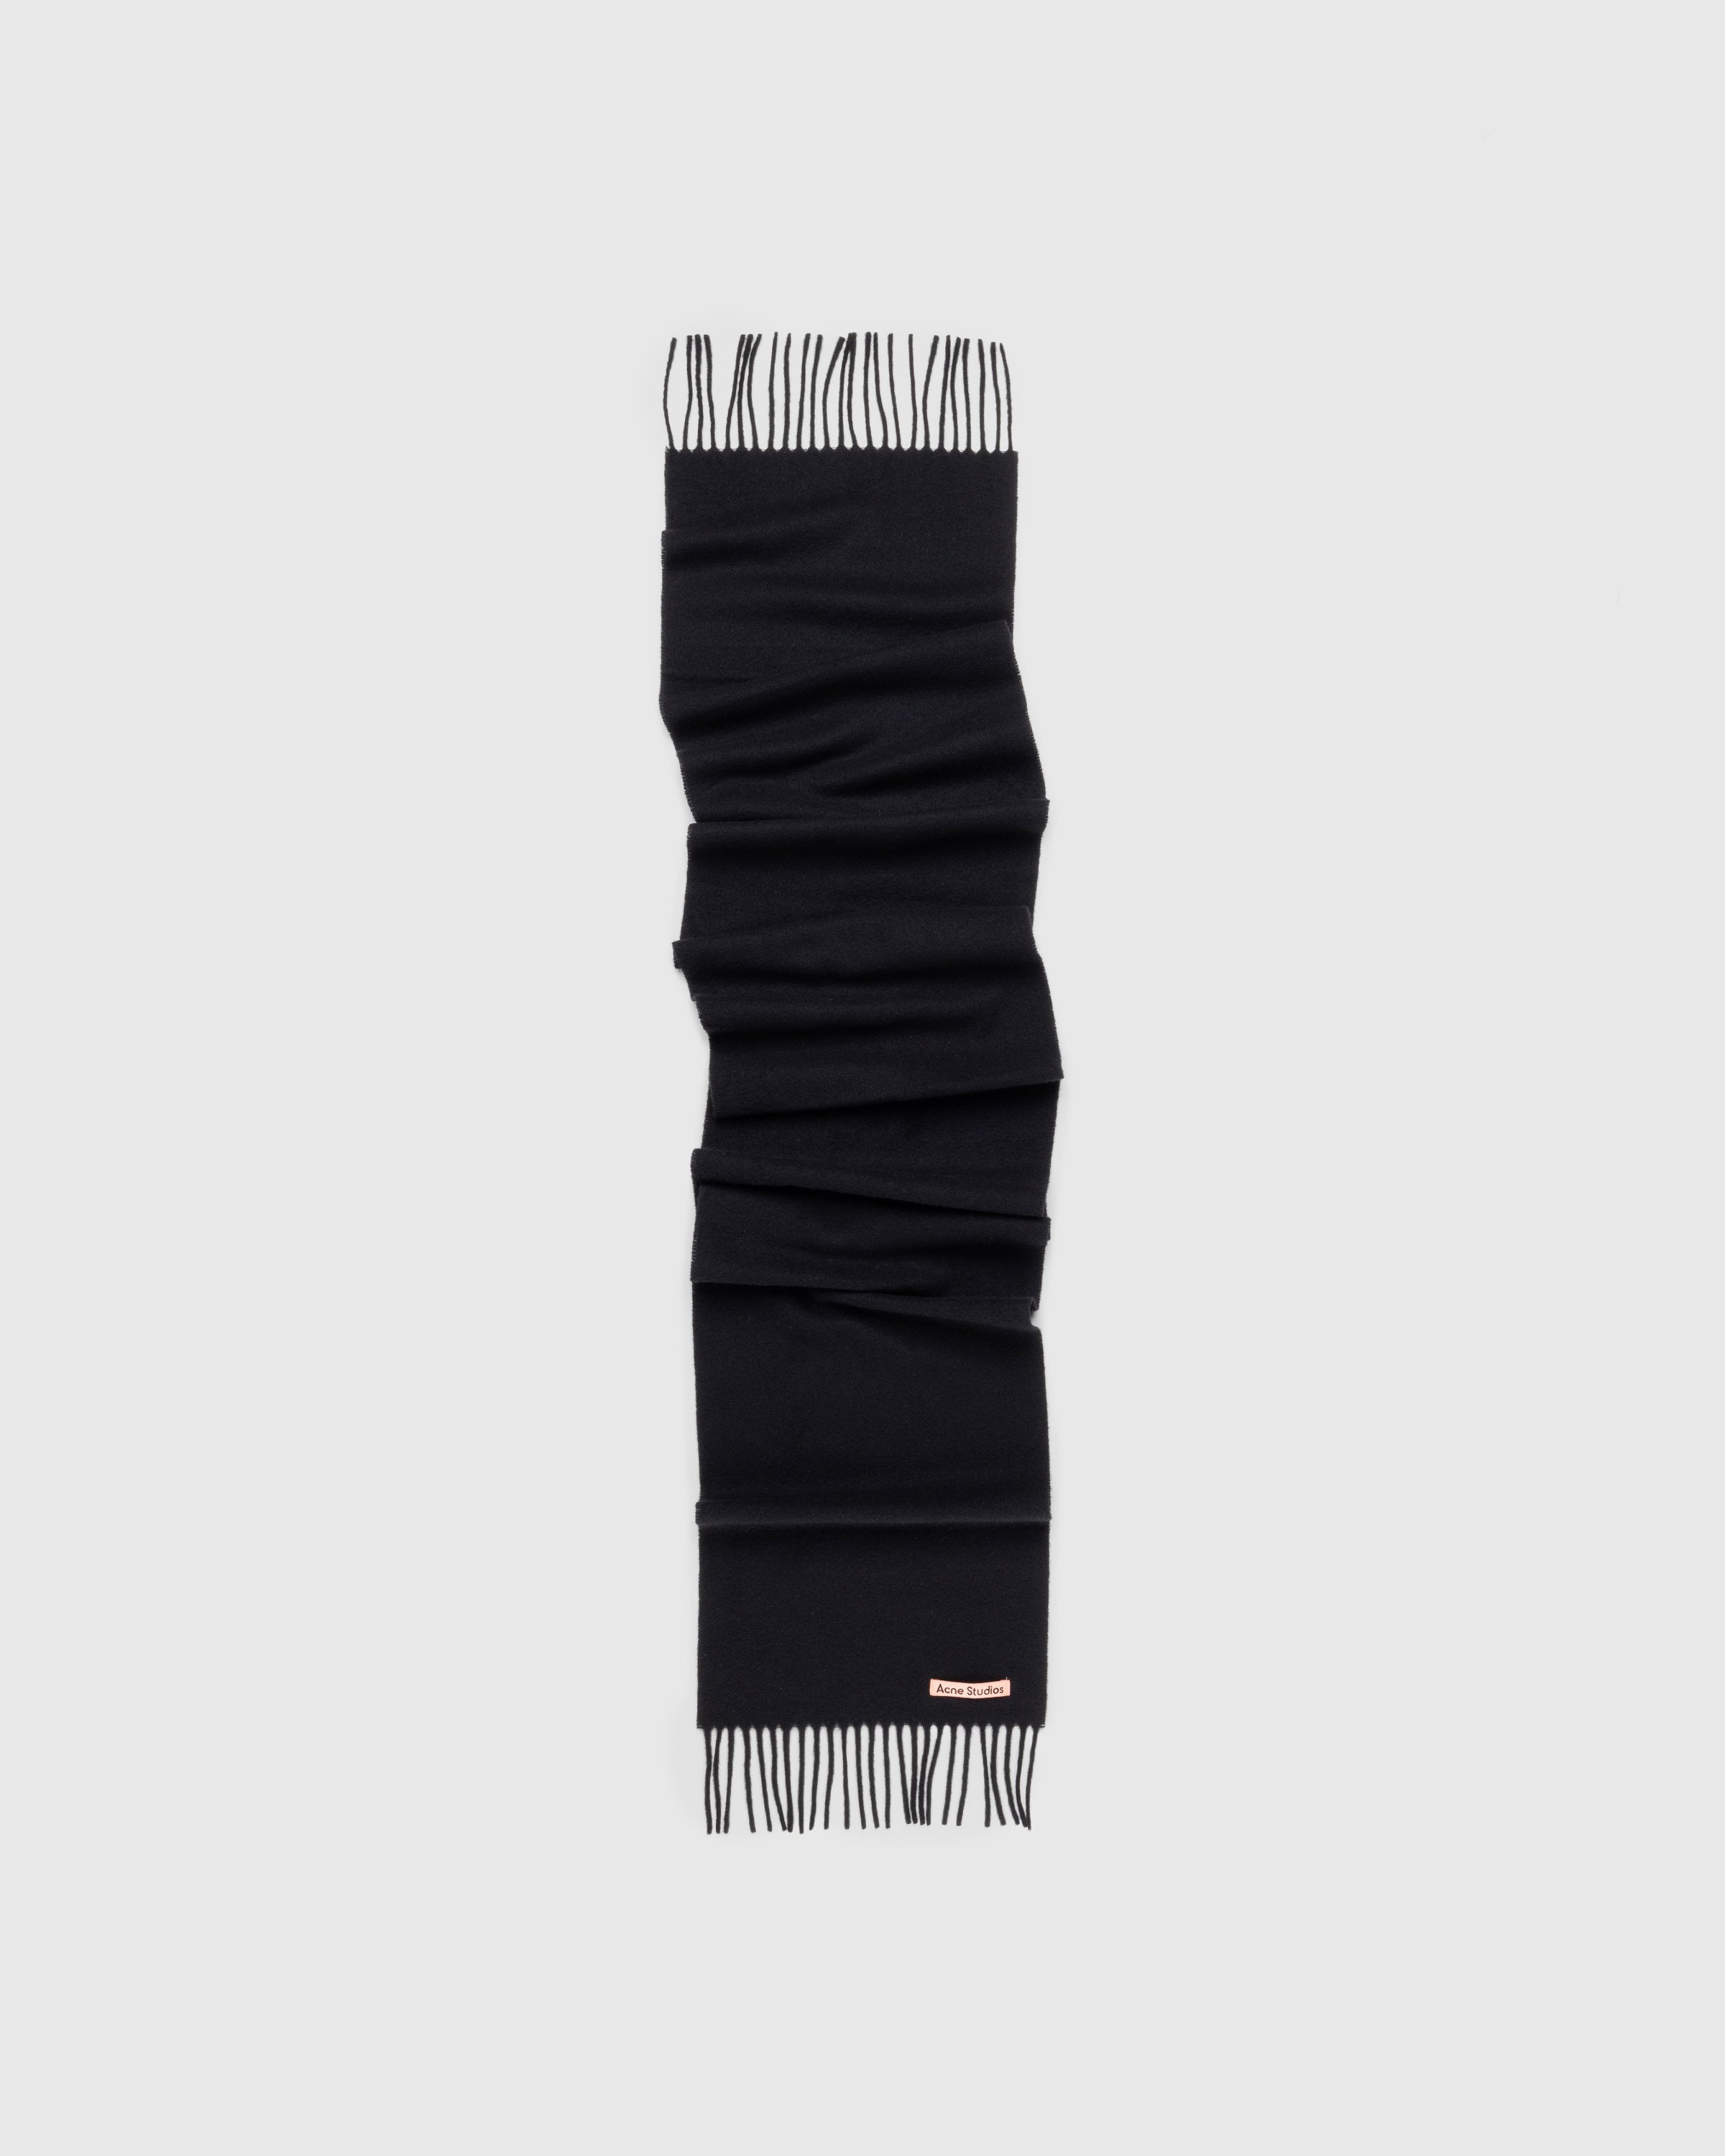 Acne Studios - Wool Fringe Scarf Black - Accessories - Black - Image 1